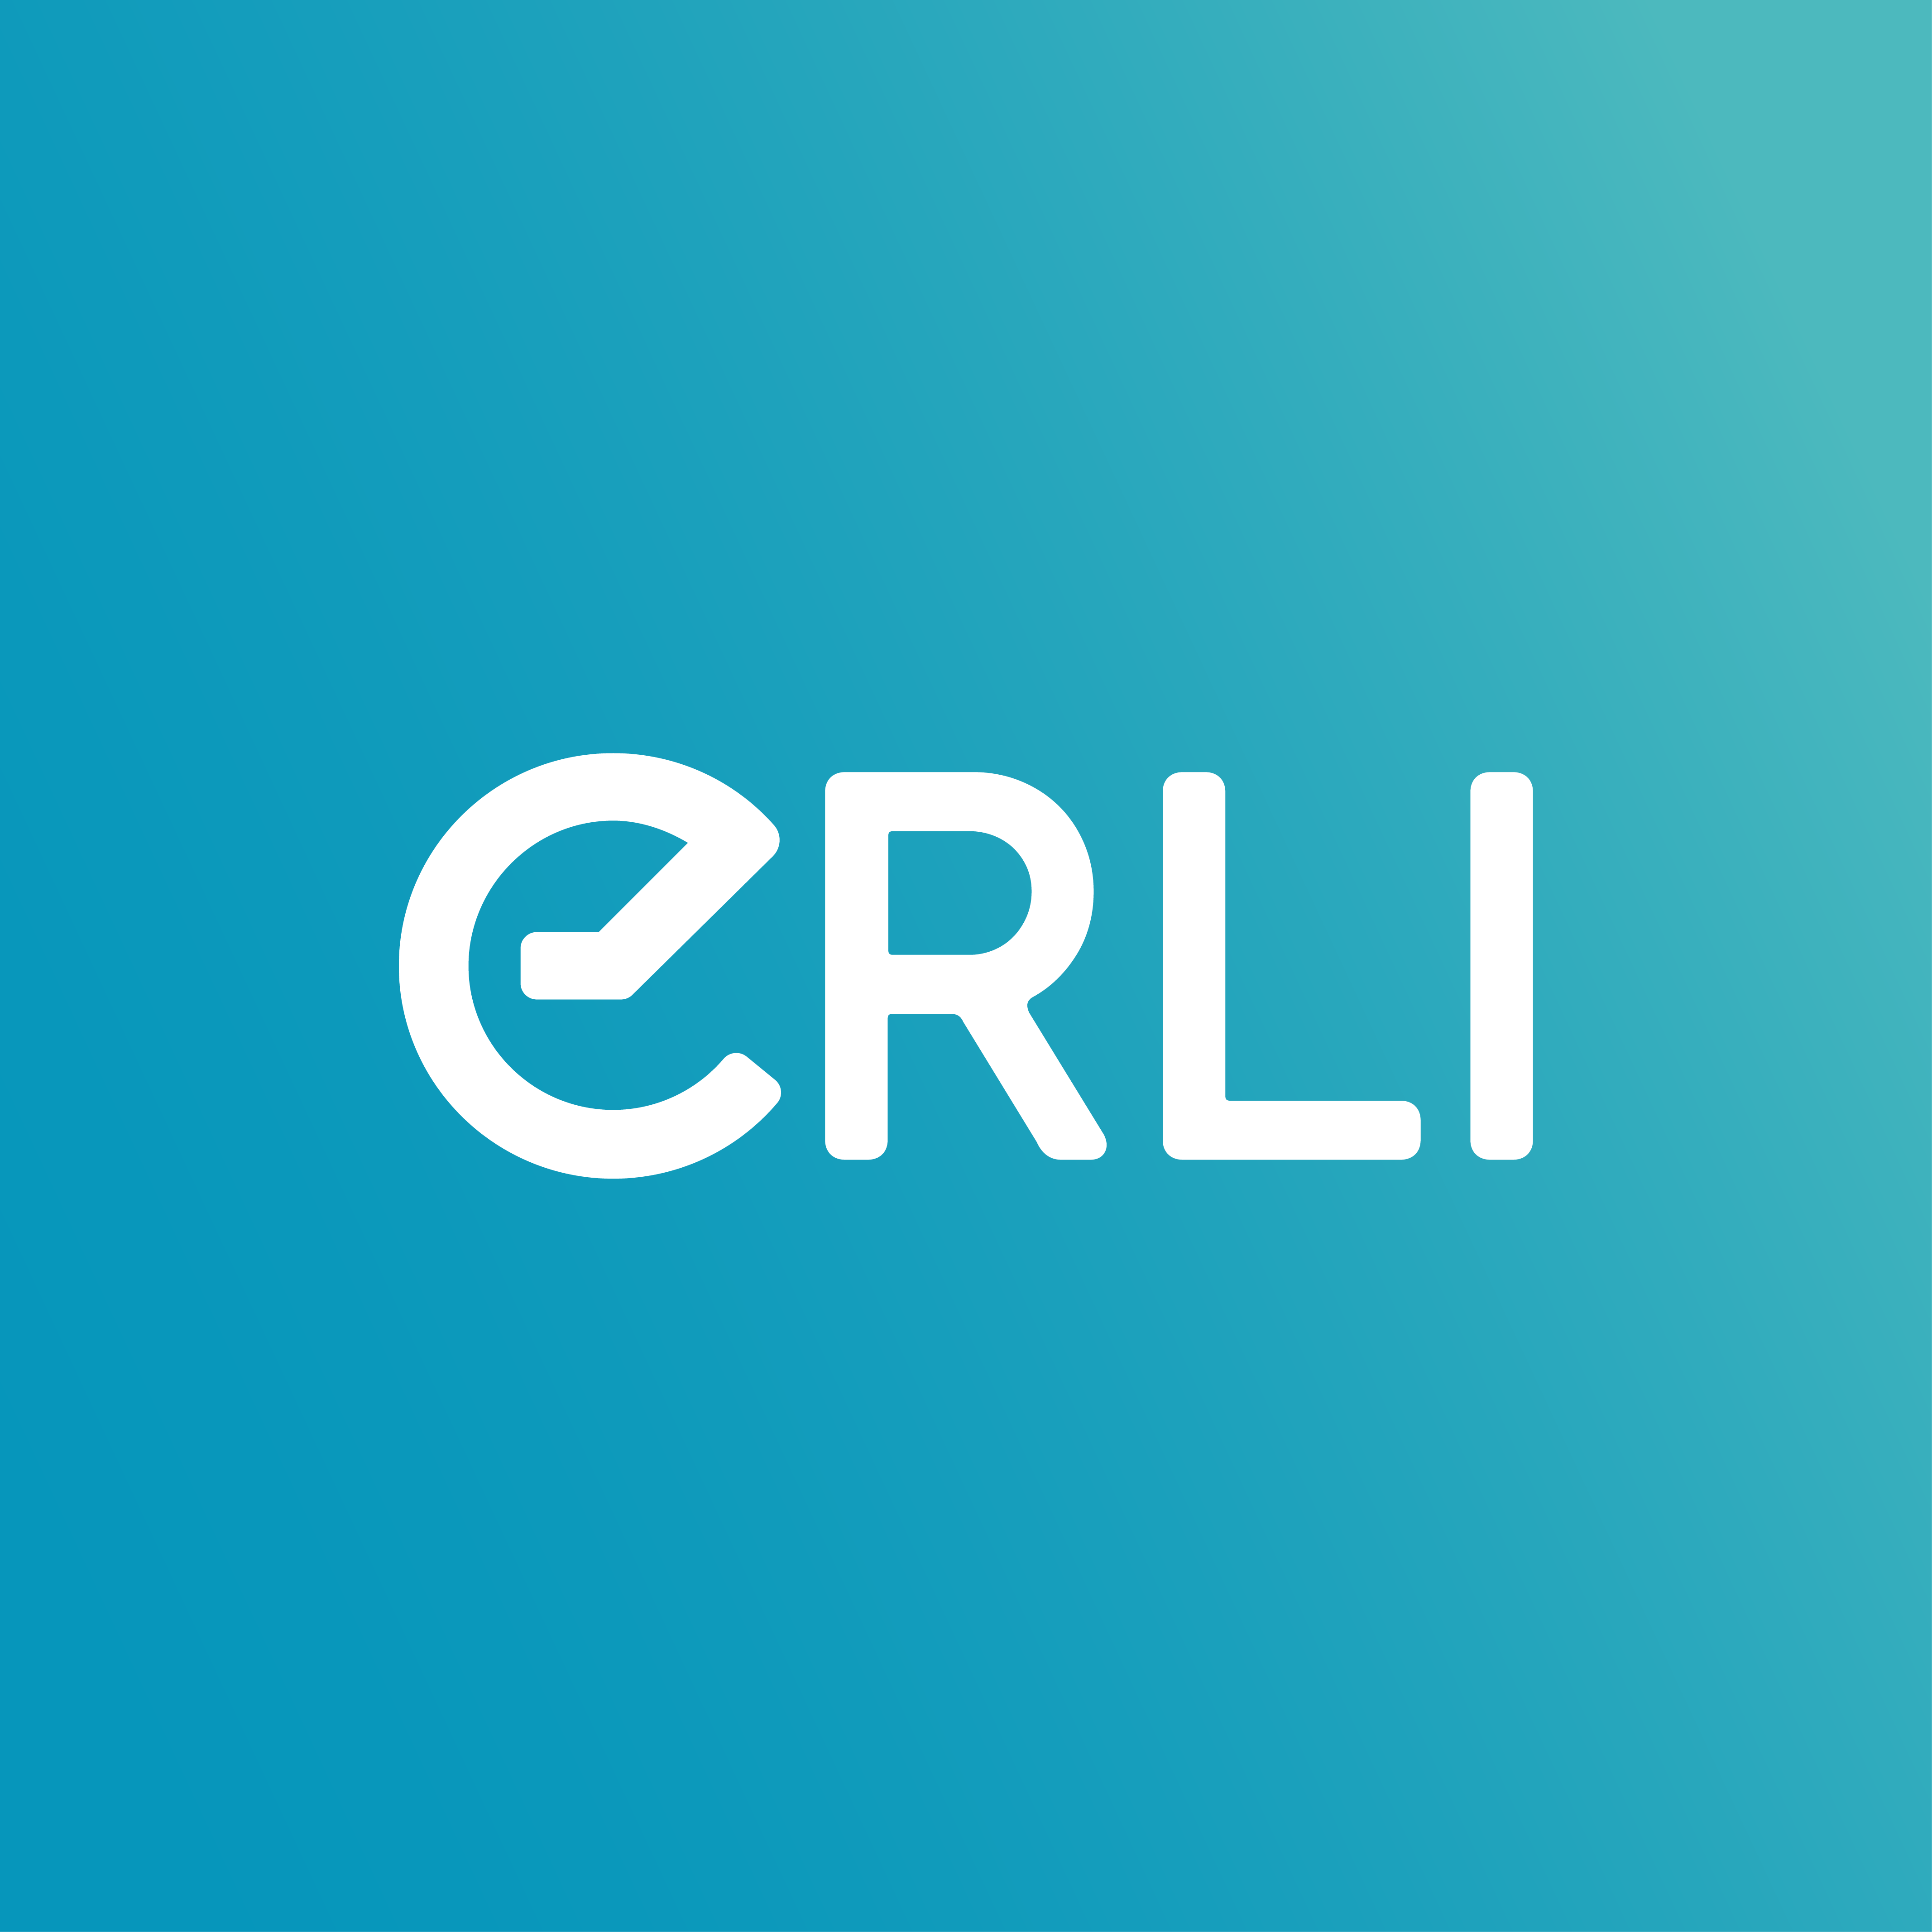 ERLI, an innovative e-commerce platform